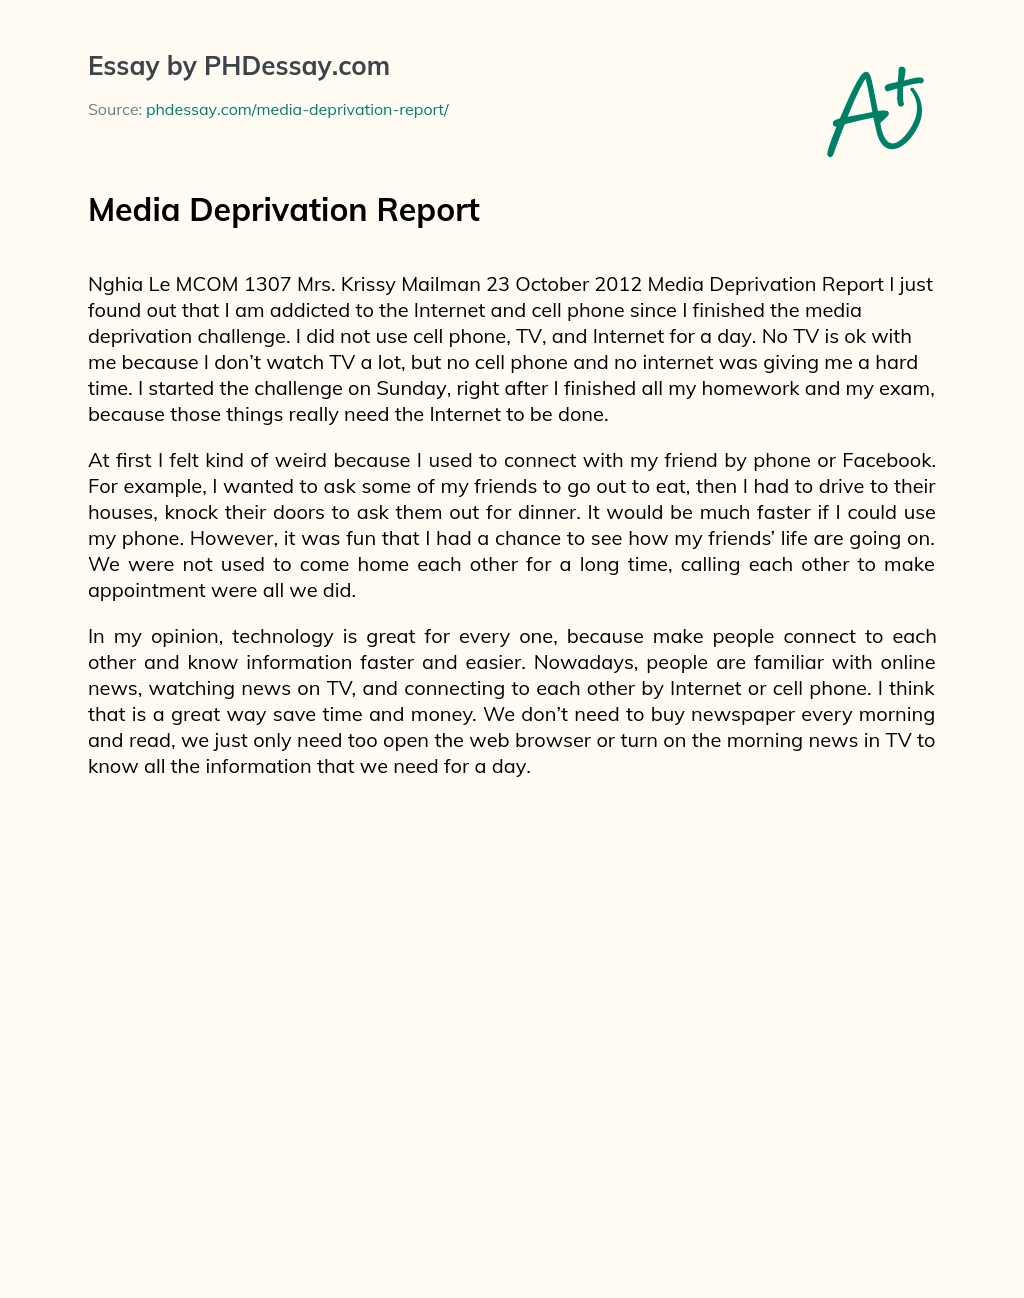 Media Deprivation Report essay